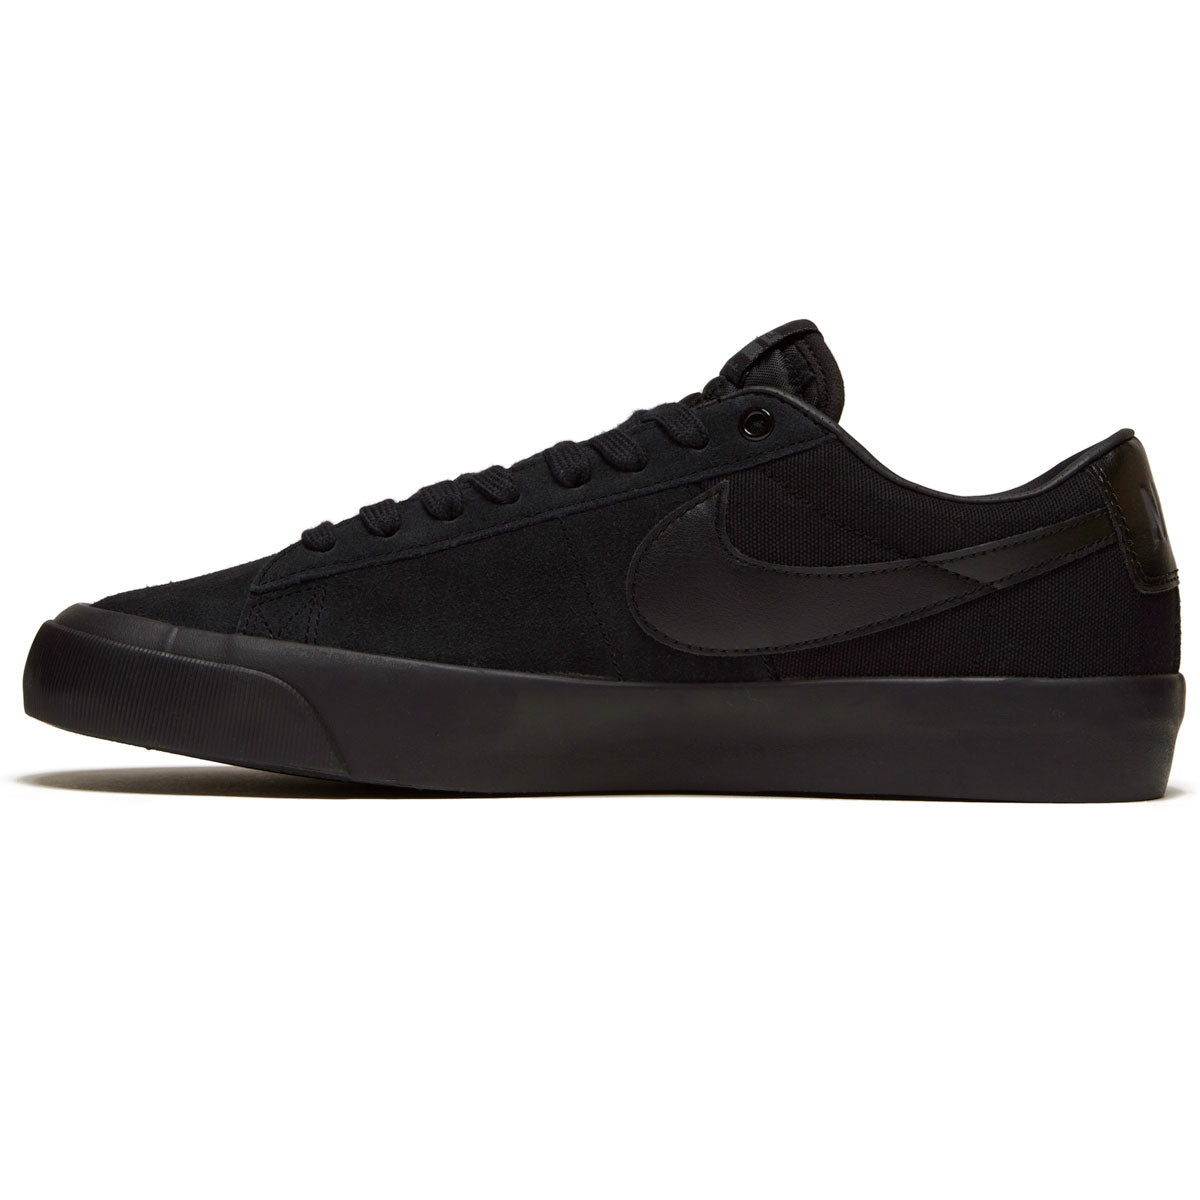 Nike SB Zoom Blazer Low Pro GT Shoes - Black/Black/Black/Anthracite image 2